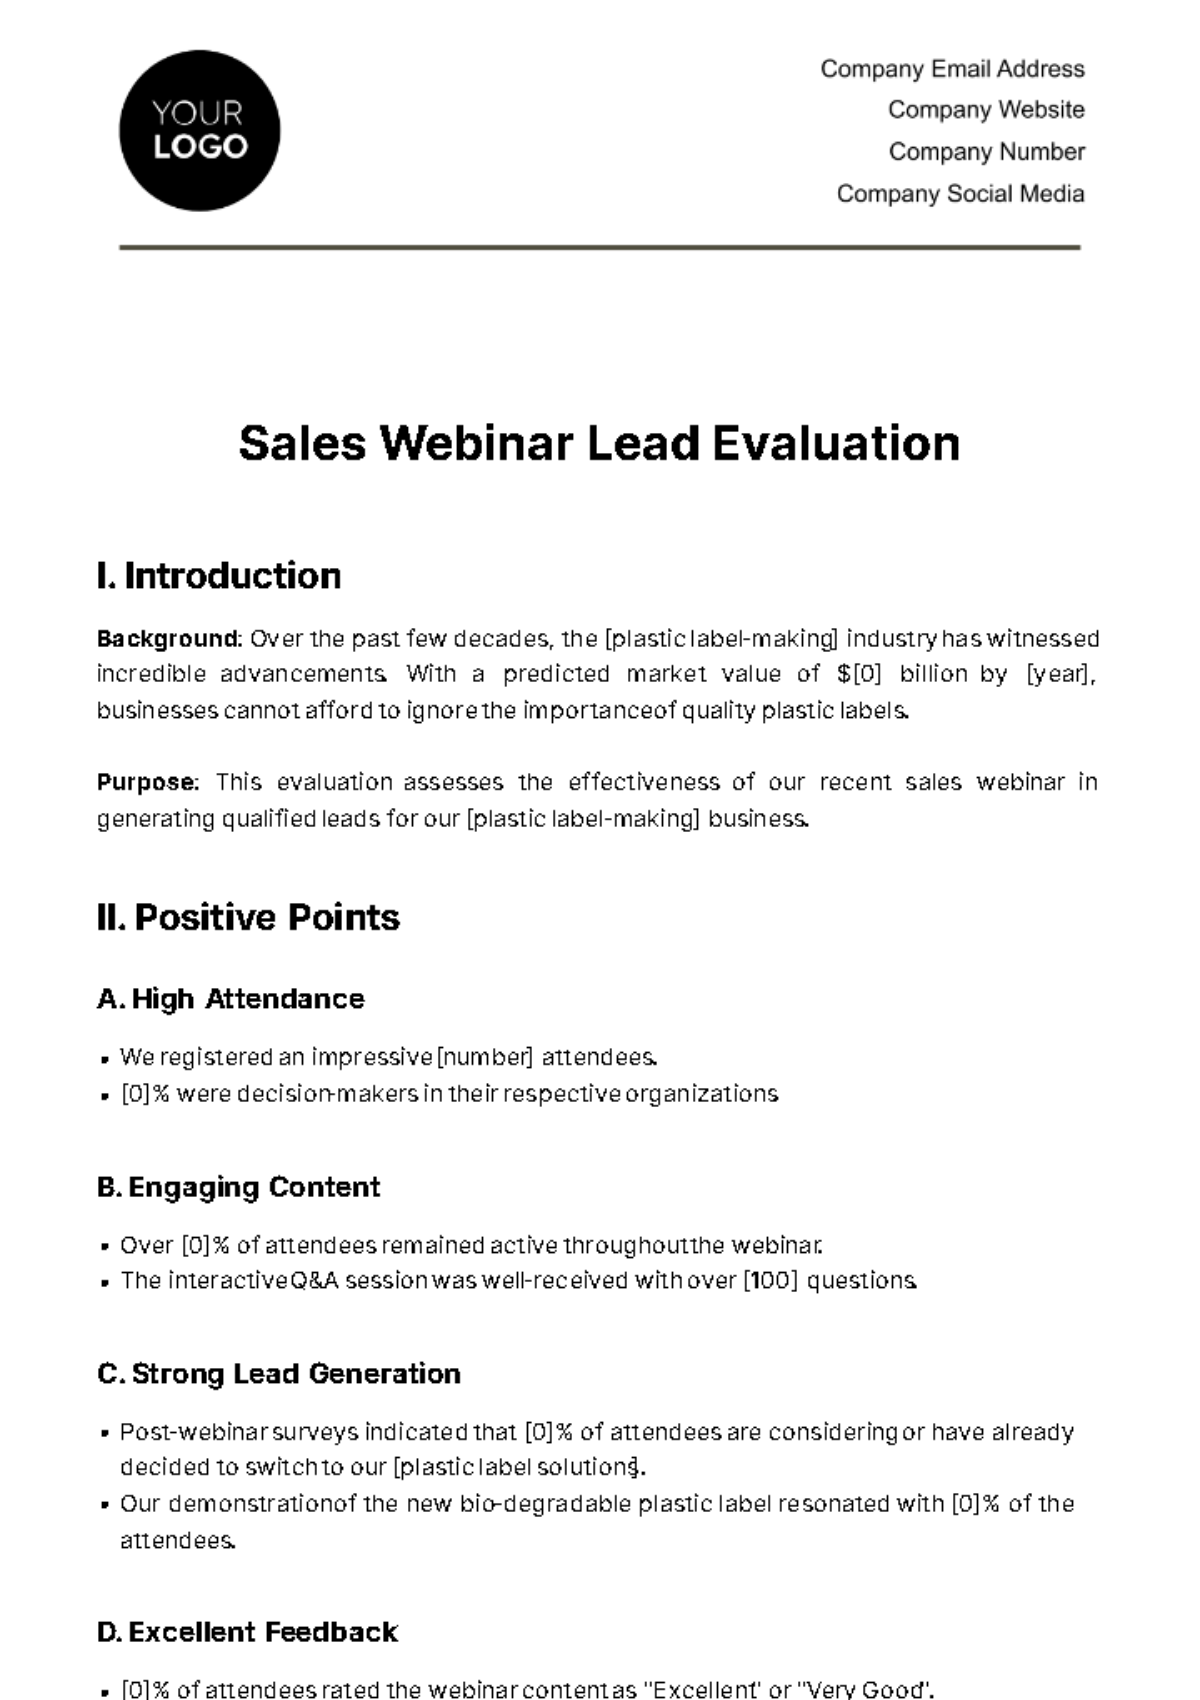 Sales Webinar Lead Evaluation Template